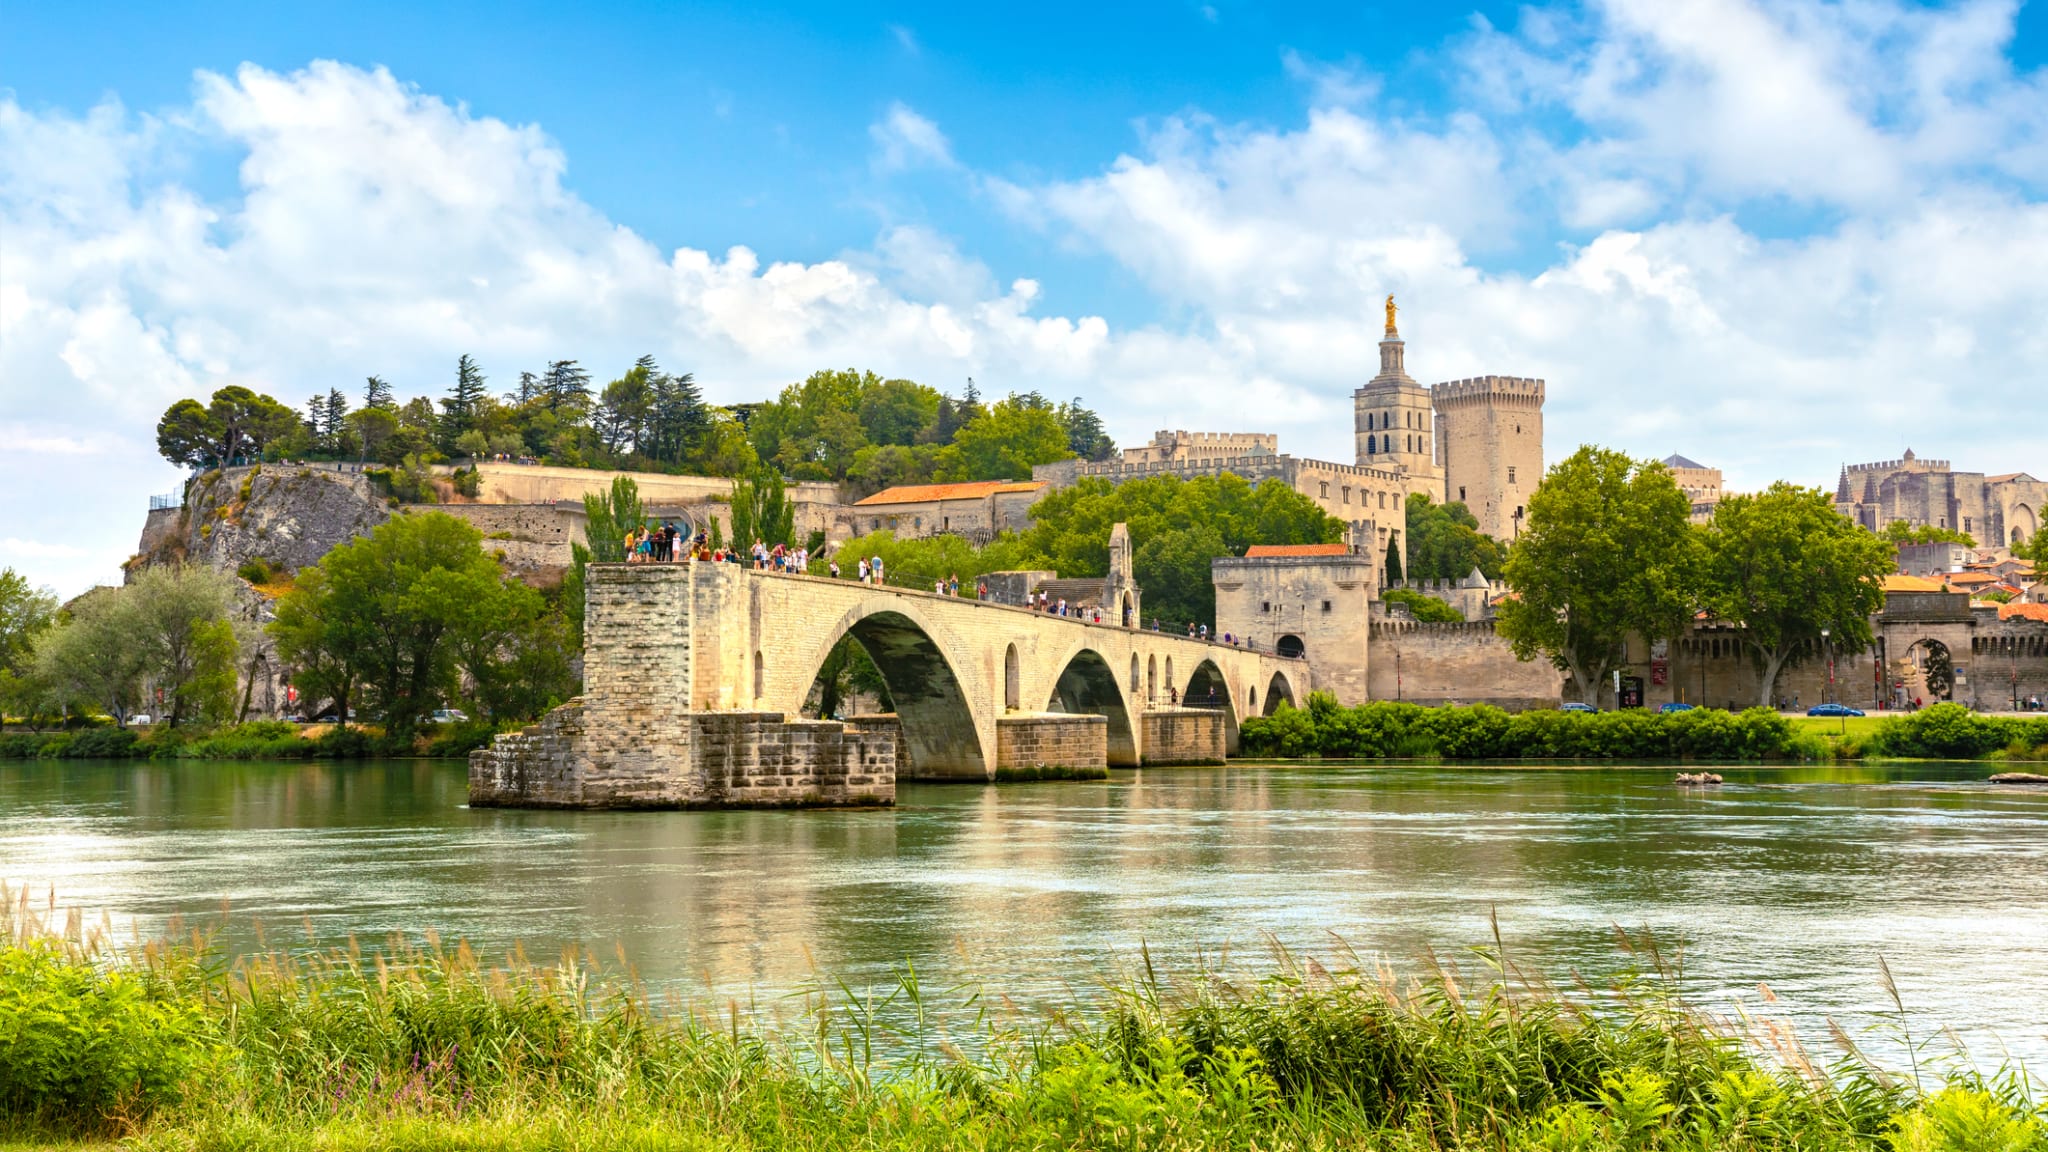 St. Benezet Brücke in Avignon ©Aleh Varanishcha/iStock / Getty Images Plus via Getty Images